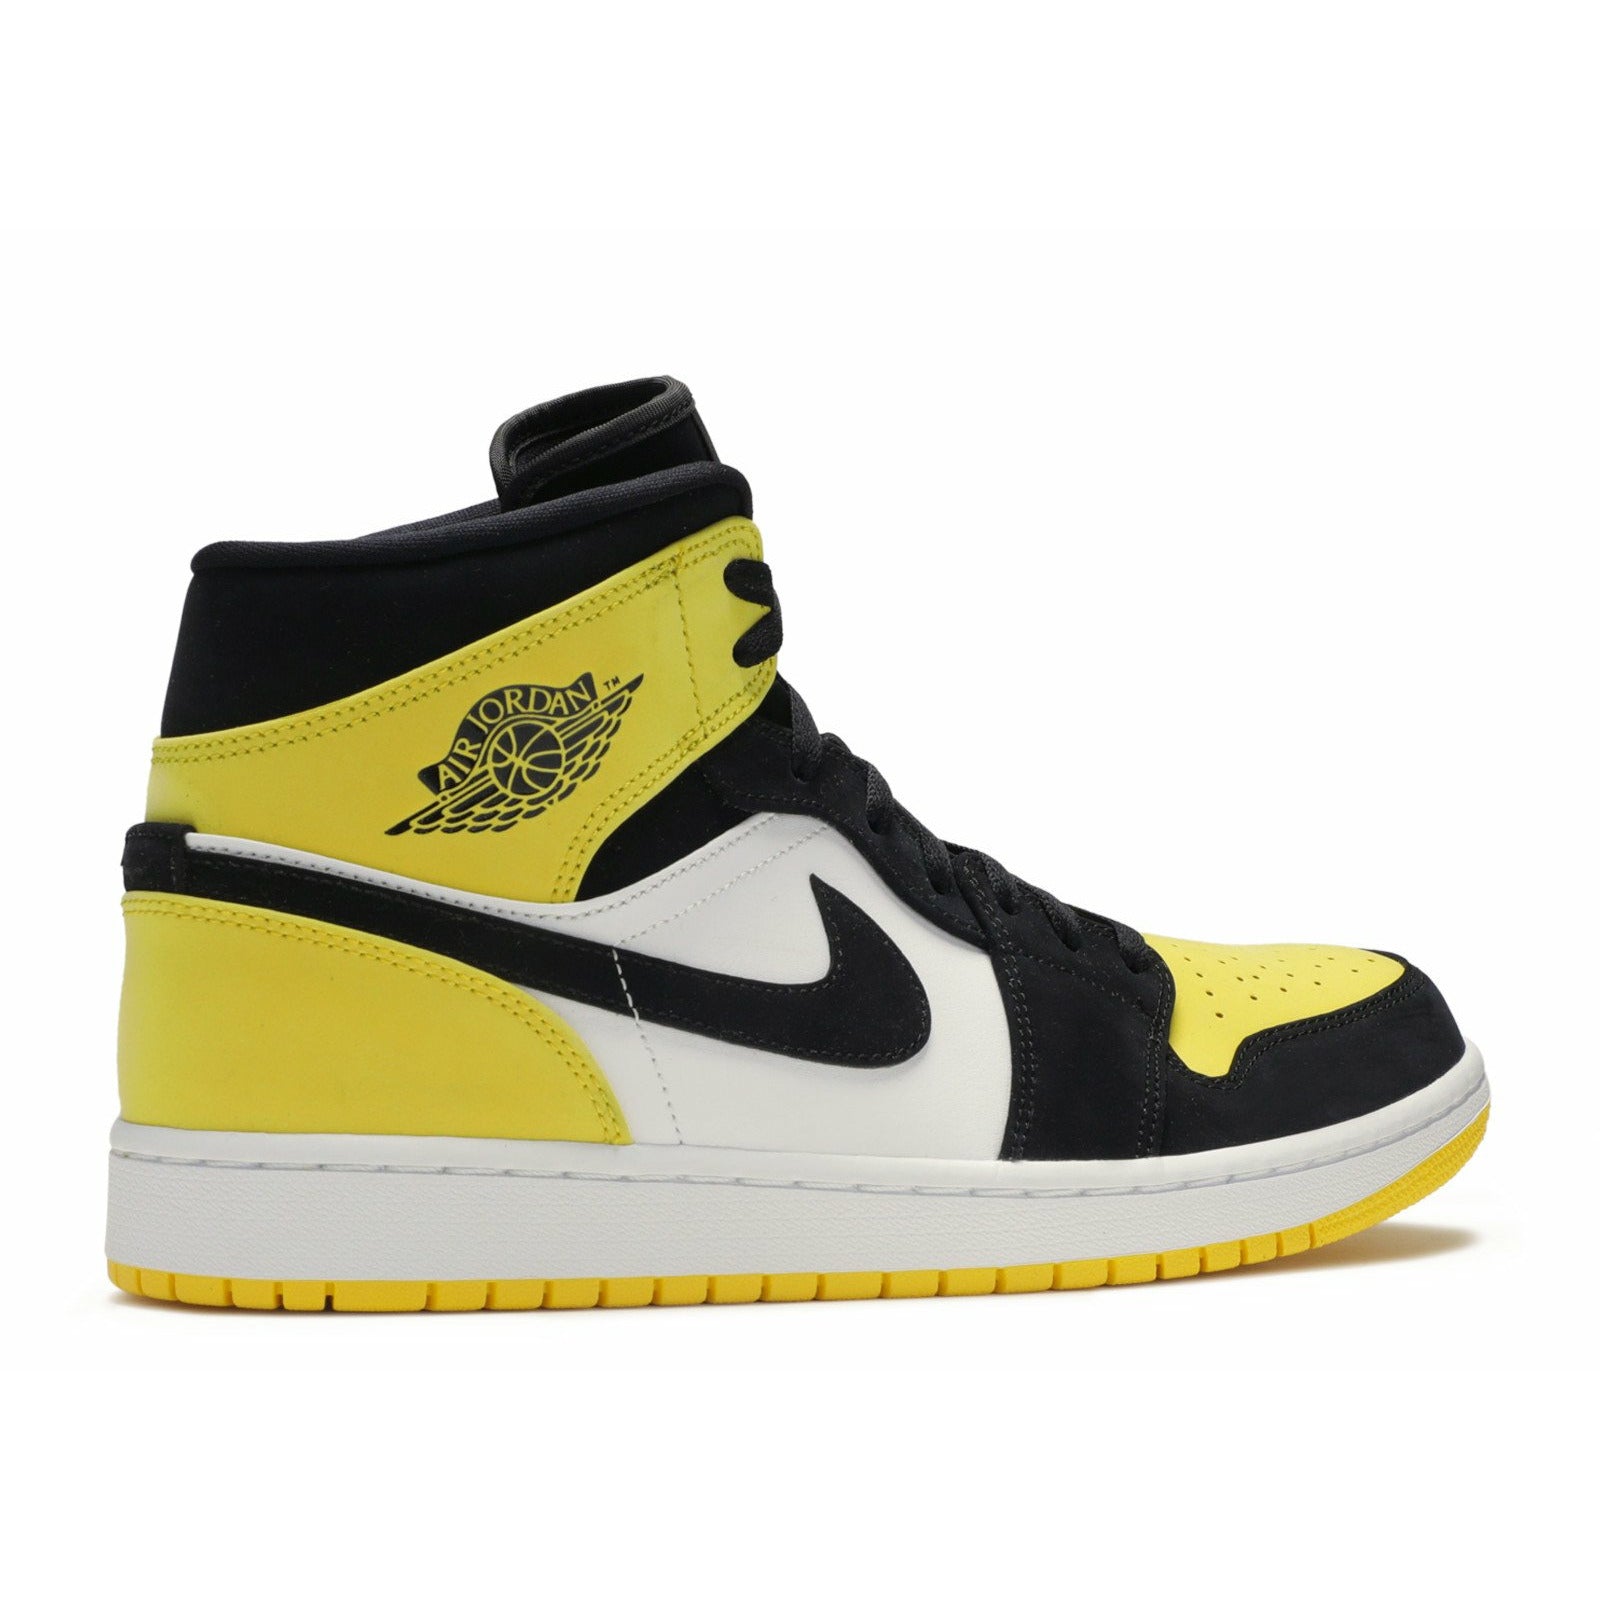 Air Jordan-Air Jordan 1 Mid "Yellow Toe"-Air Jordan 1 Mid "Yellow Toe" Sneakers
Product code: 853542-071 Colour: Black/Black-Tour Yellow-White Year of release: 2019
| MrSneaker is Europe's number 1 exclusive sneaker store.-mrsneaker